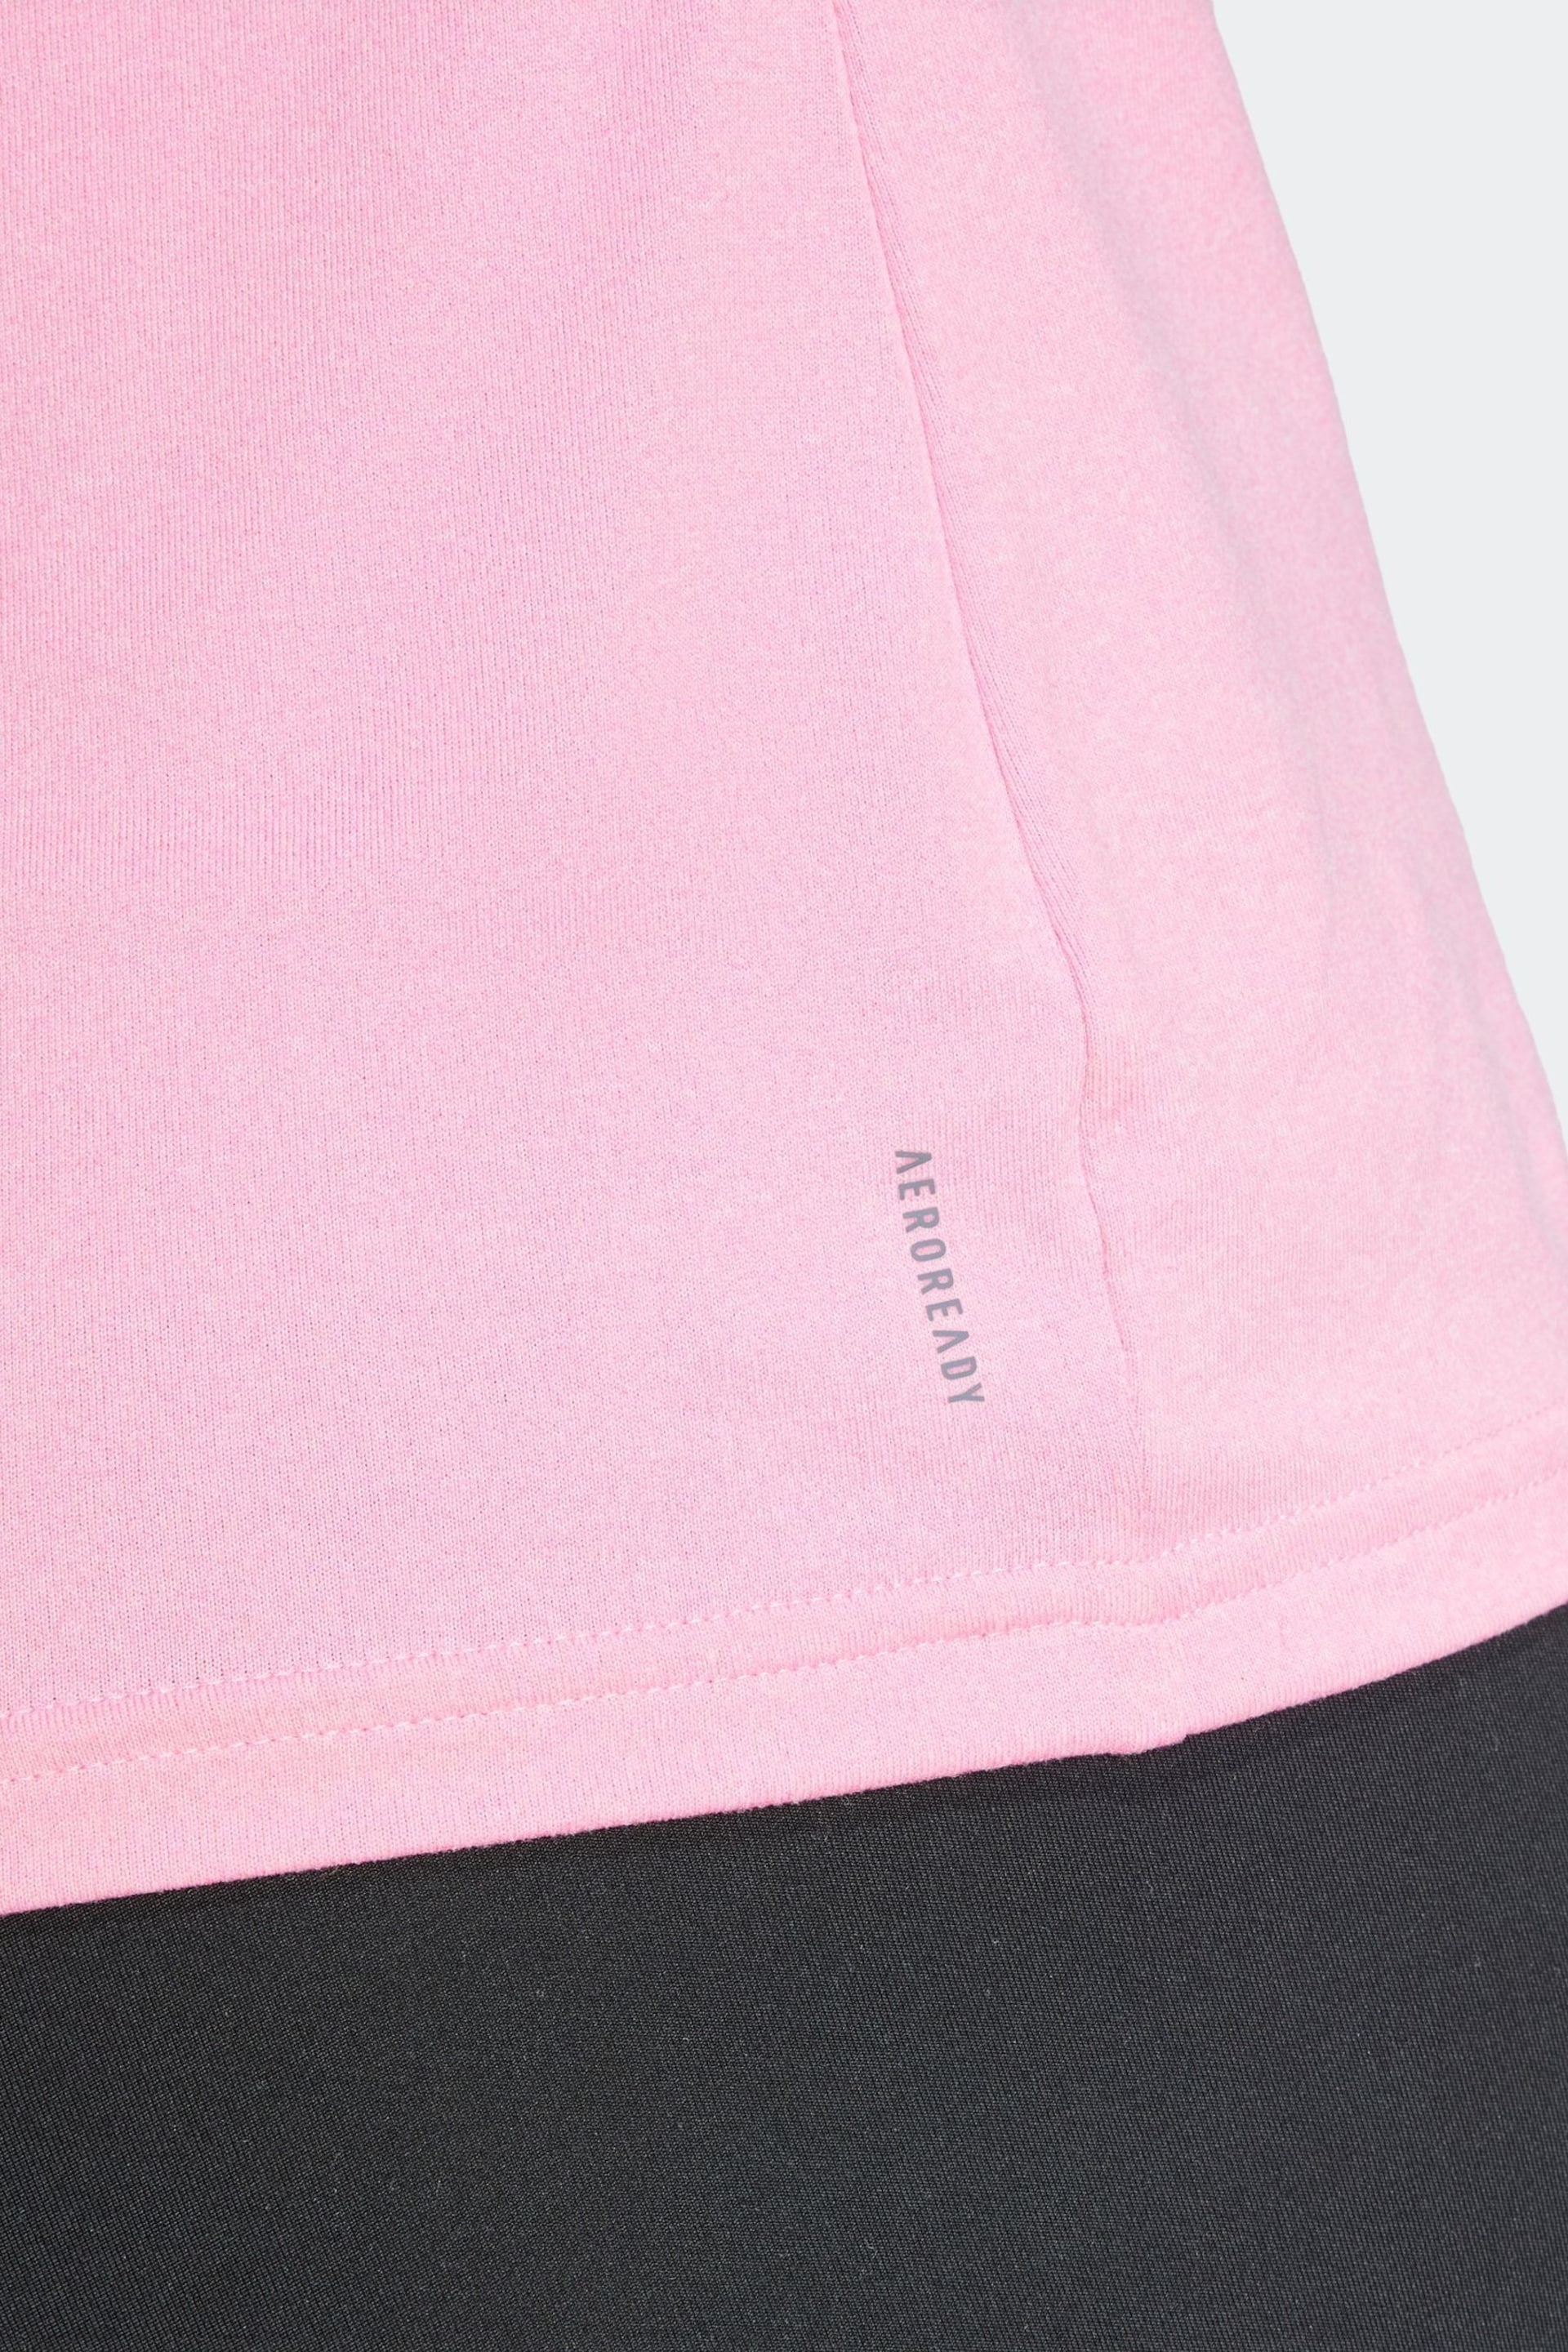 adidas Pink Aeroready Train Essentials Minimal Branding V-Neck T-Shirt - Image 6 of 7